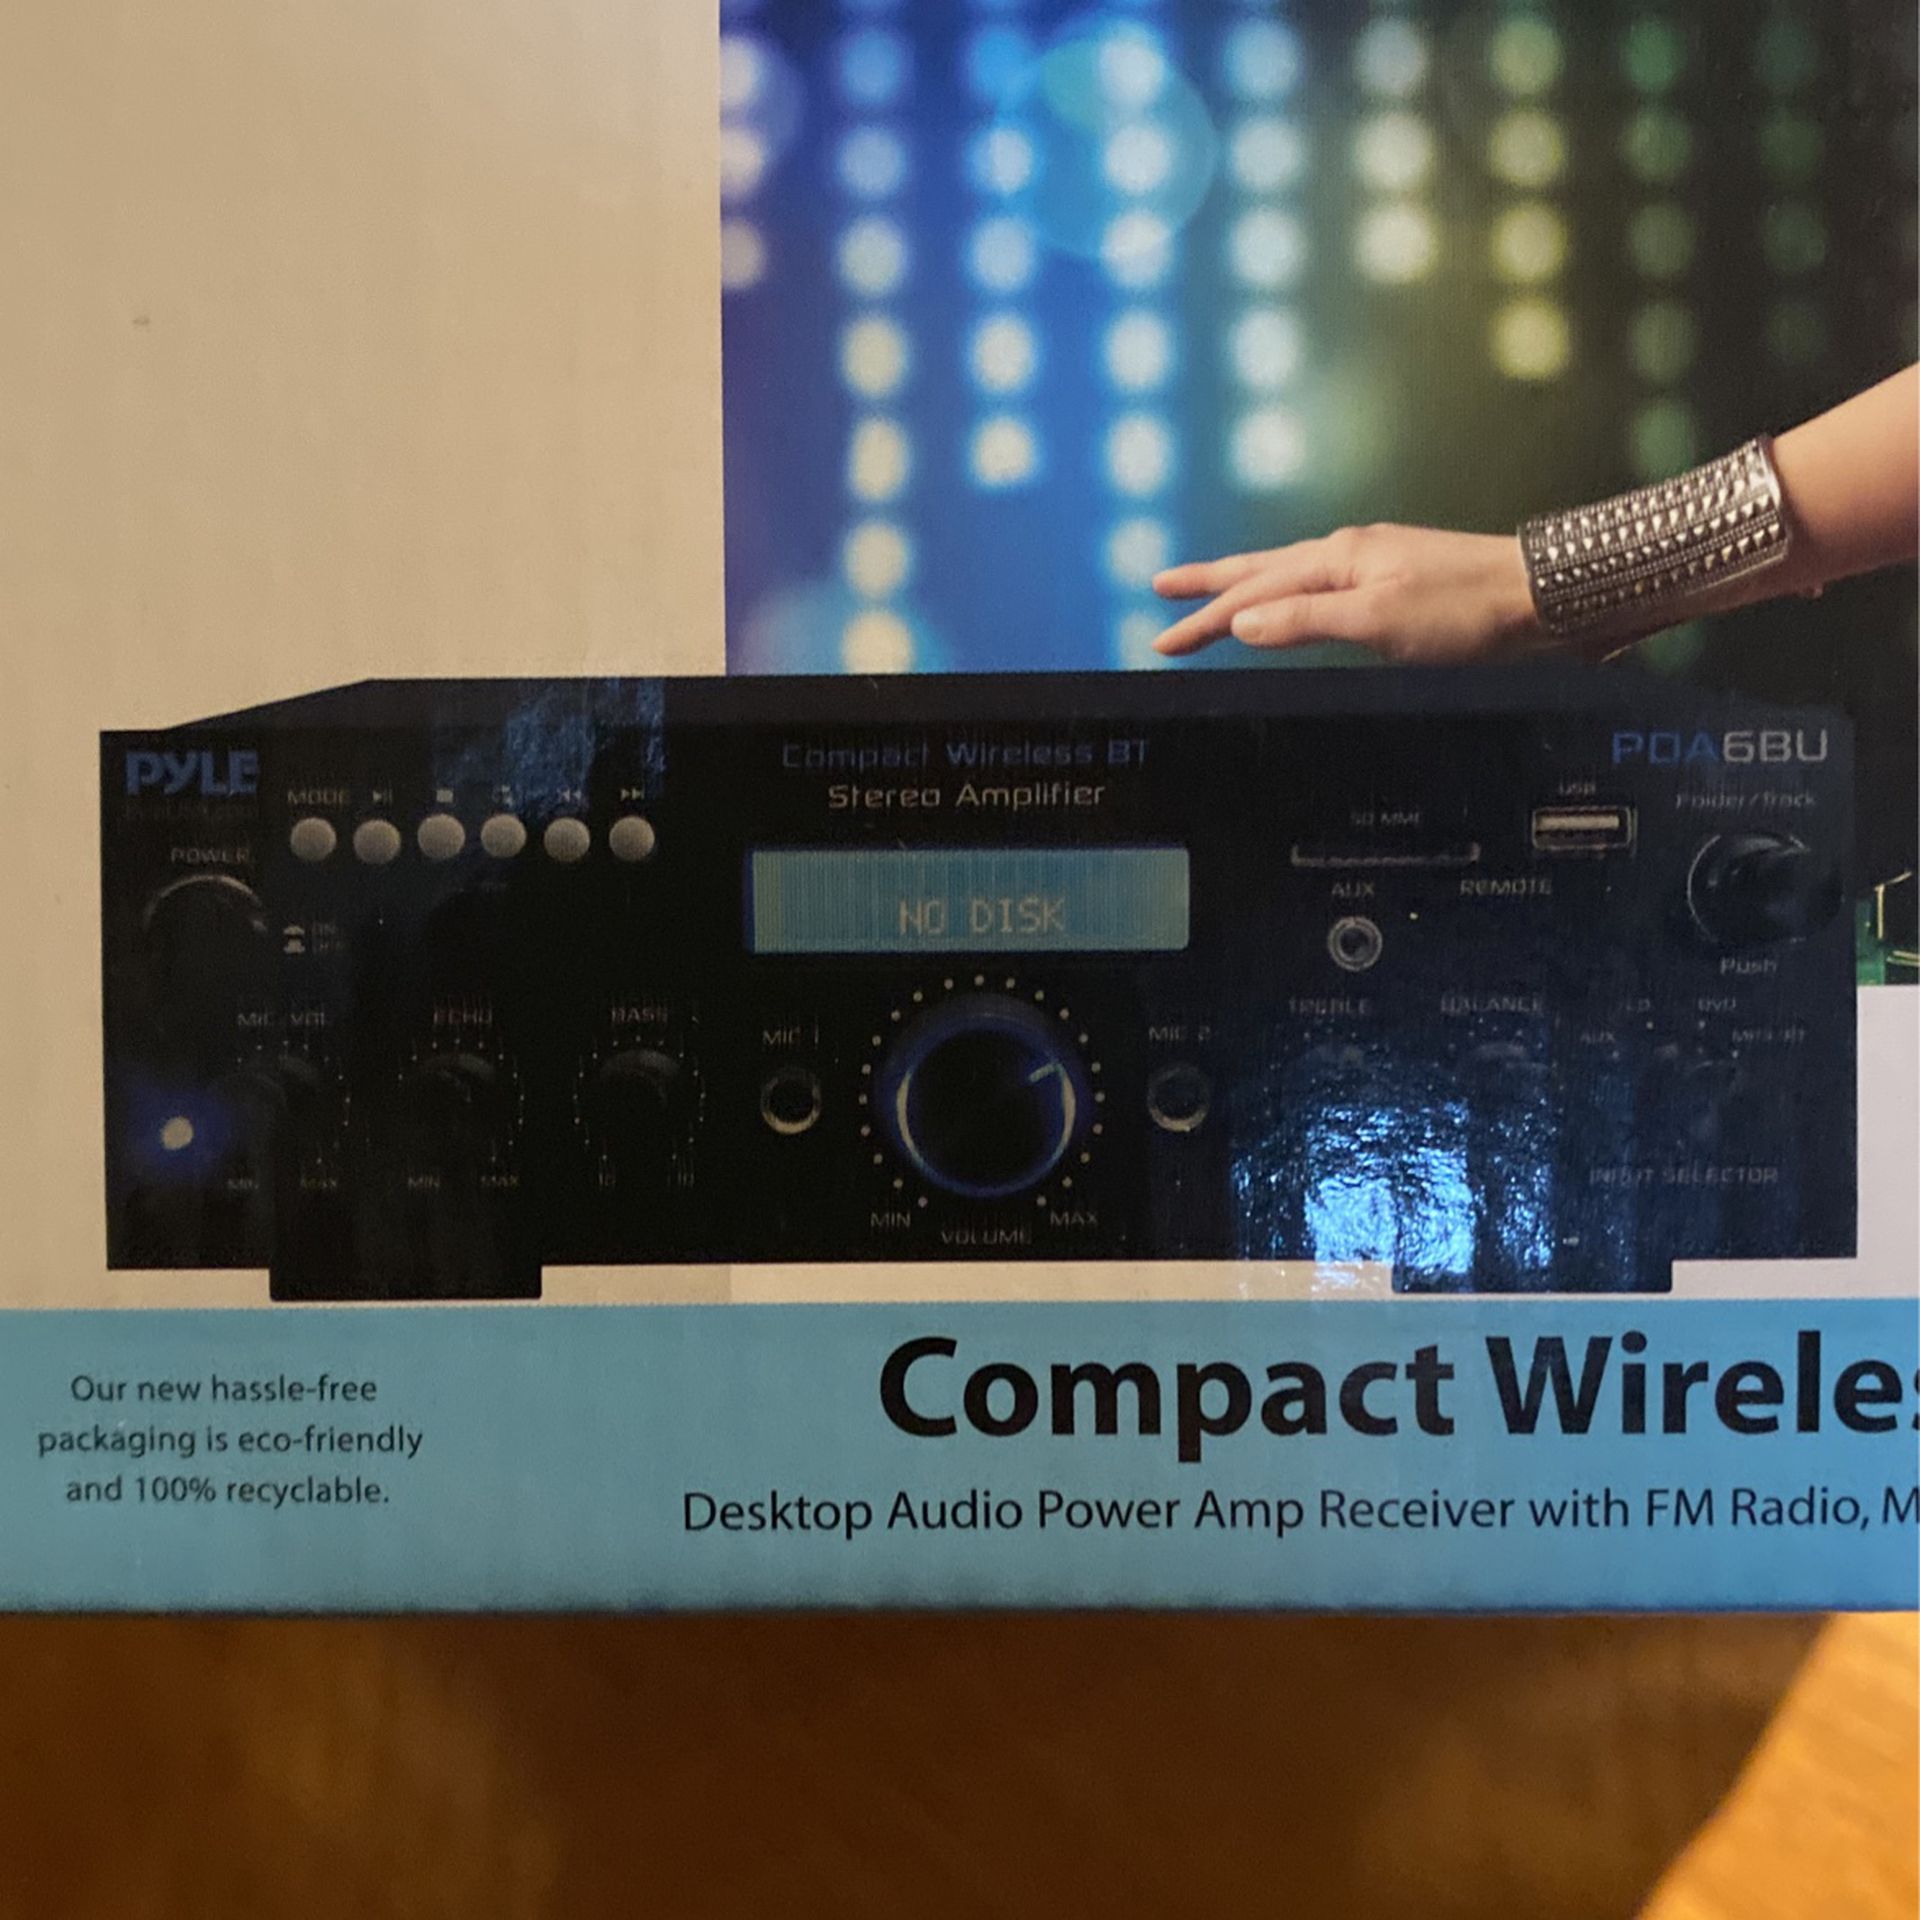 Compact Wireless BT Stereo Amplifier